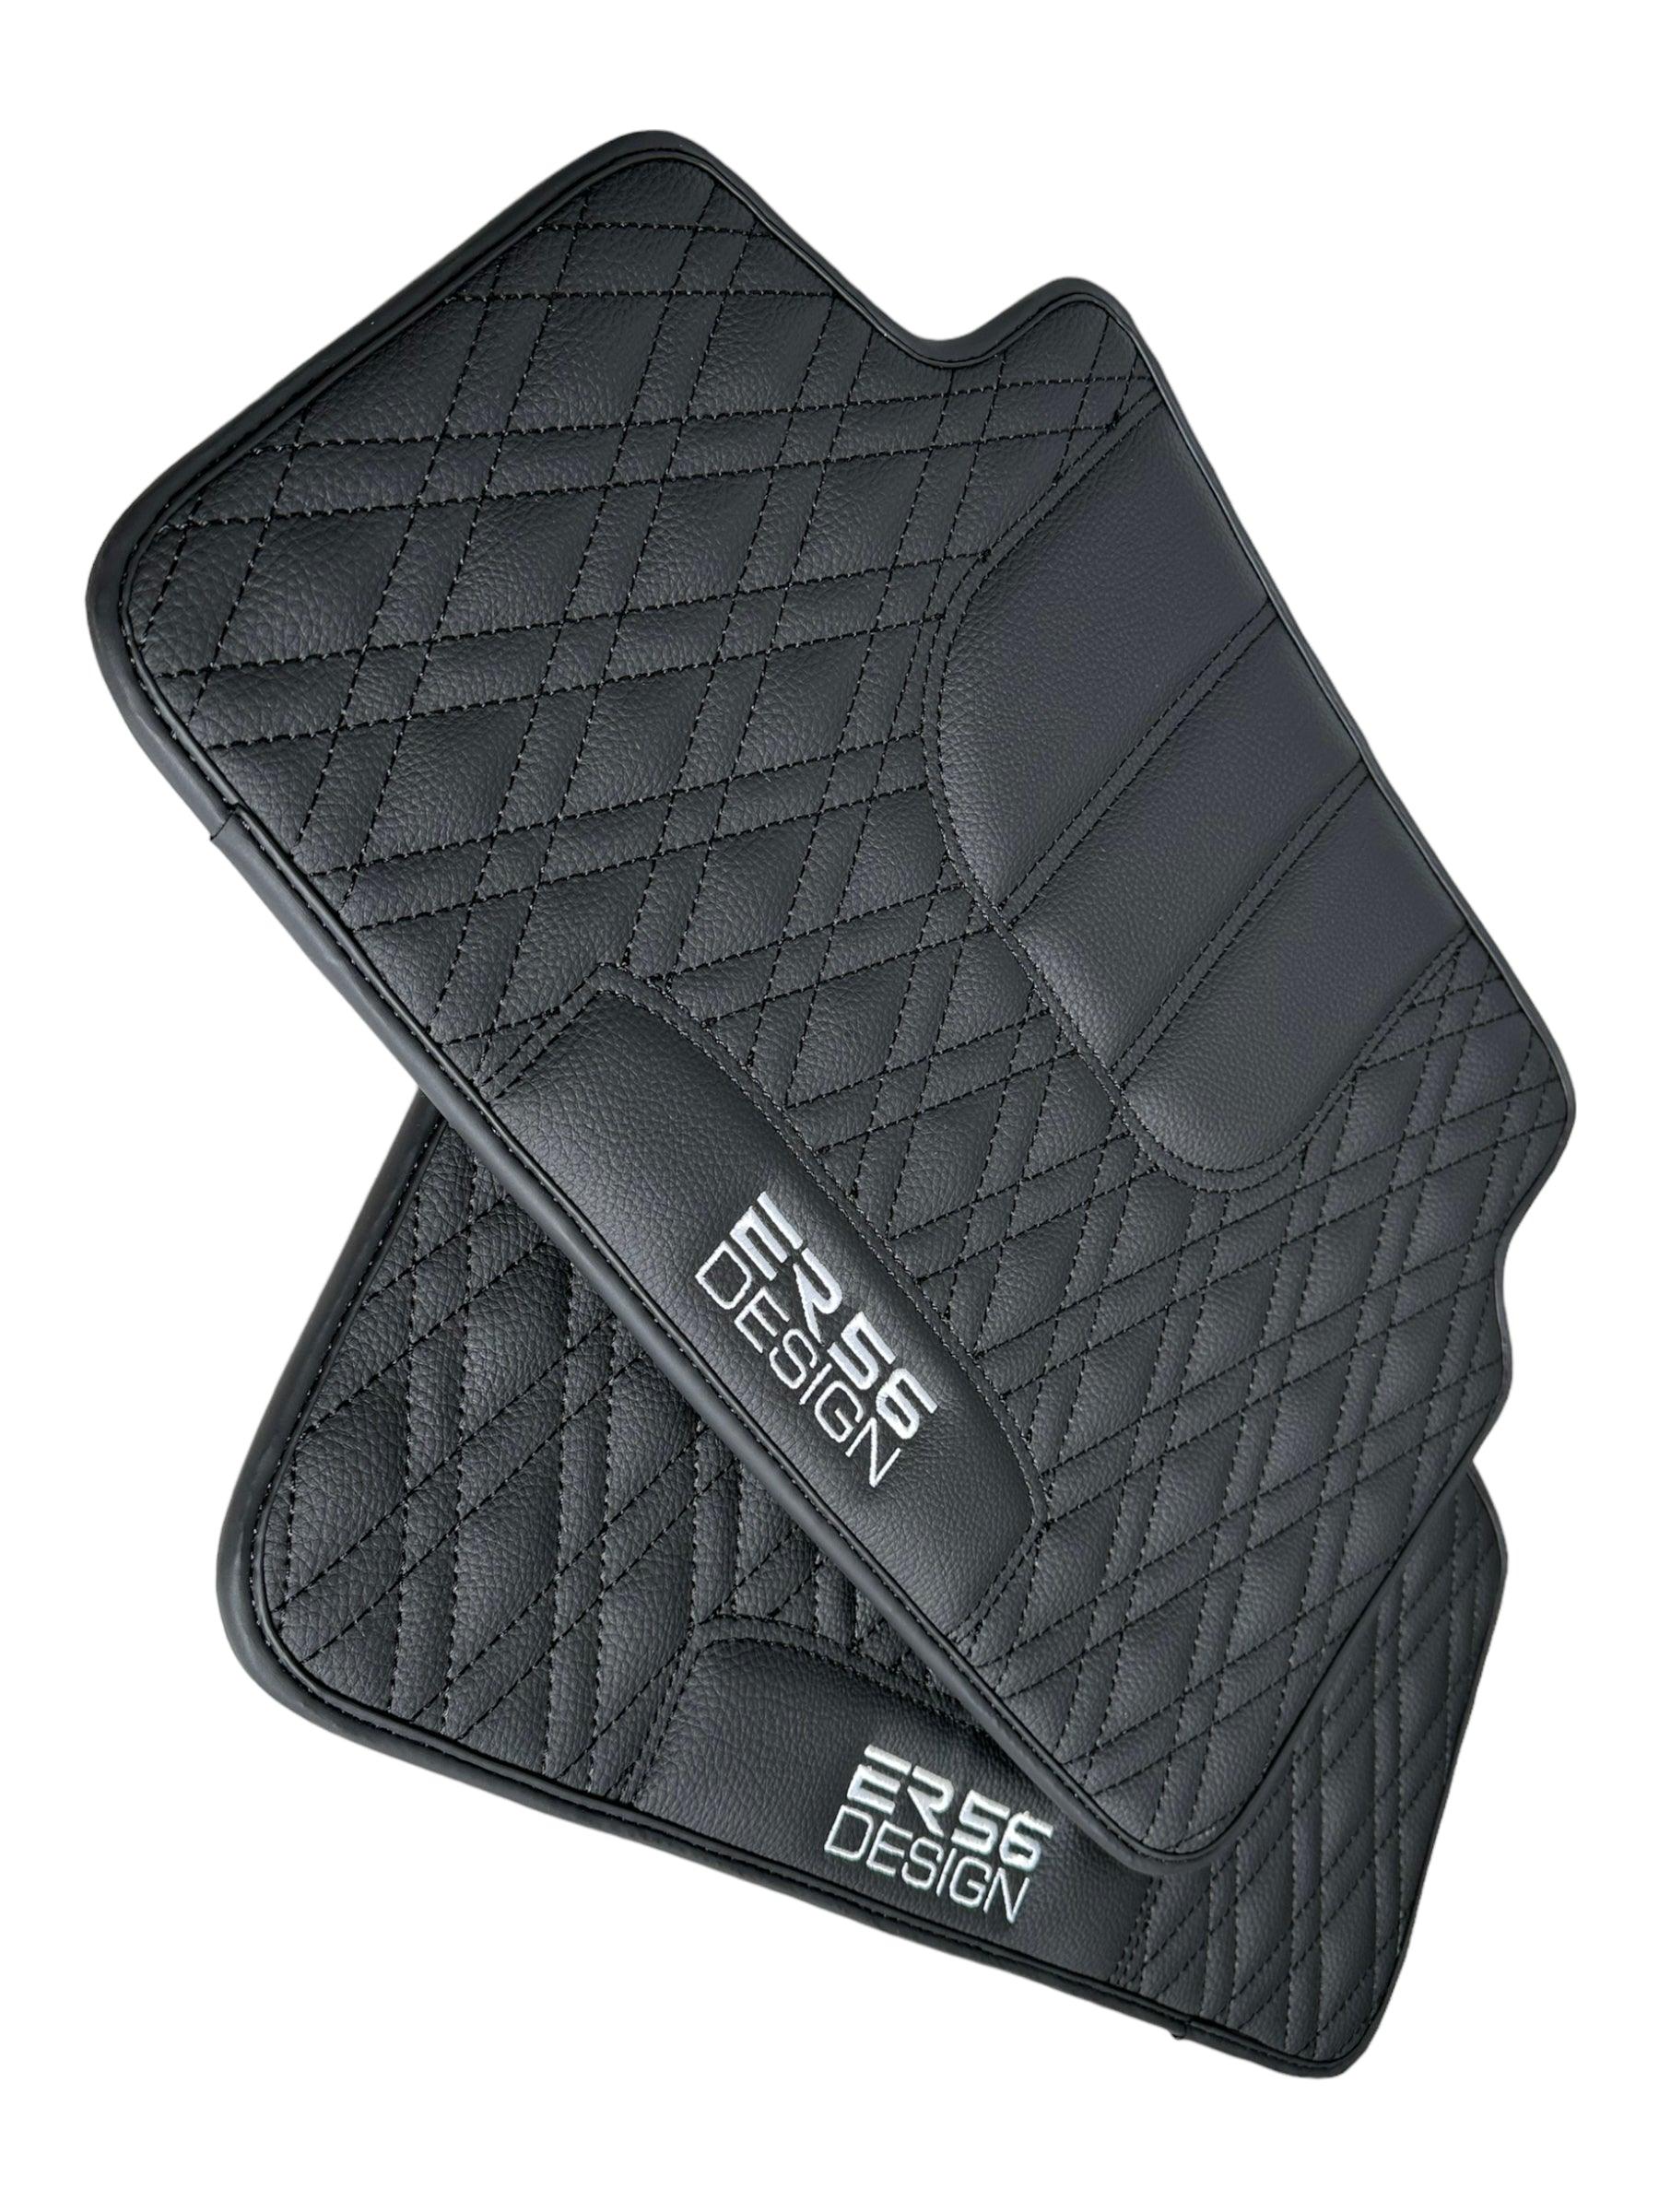 Floor Mats For BMW M3 E46 Black Leather Er56 Design - AutoWin